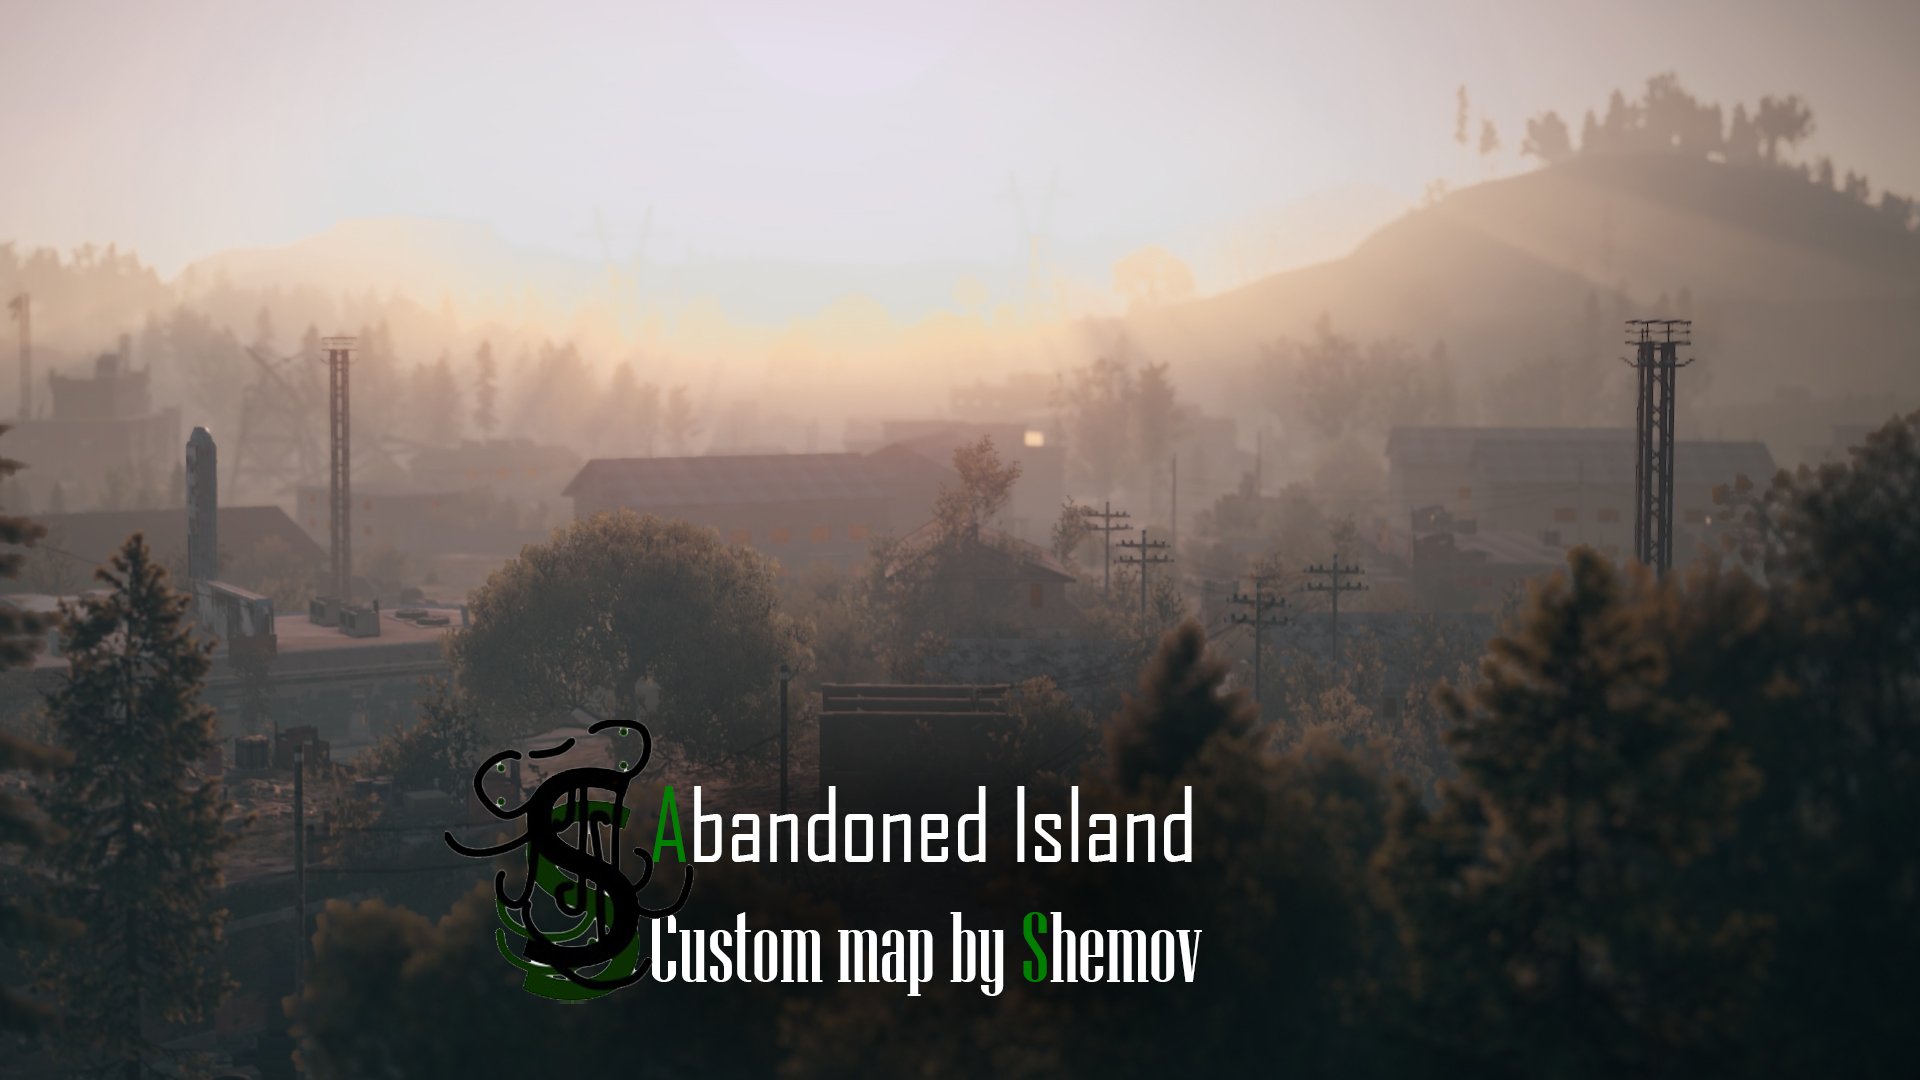 Abandoned Island | Custom Map By Shemov